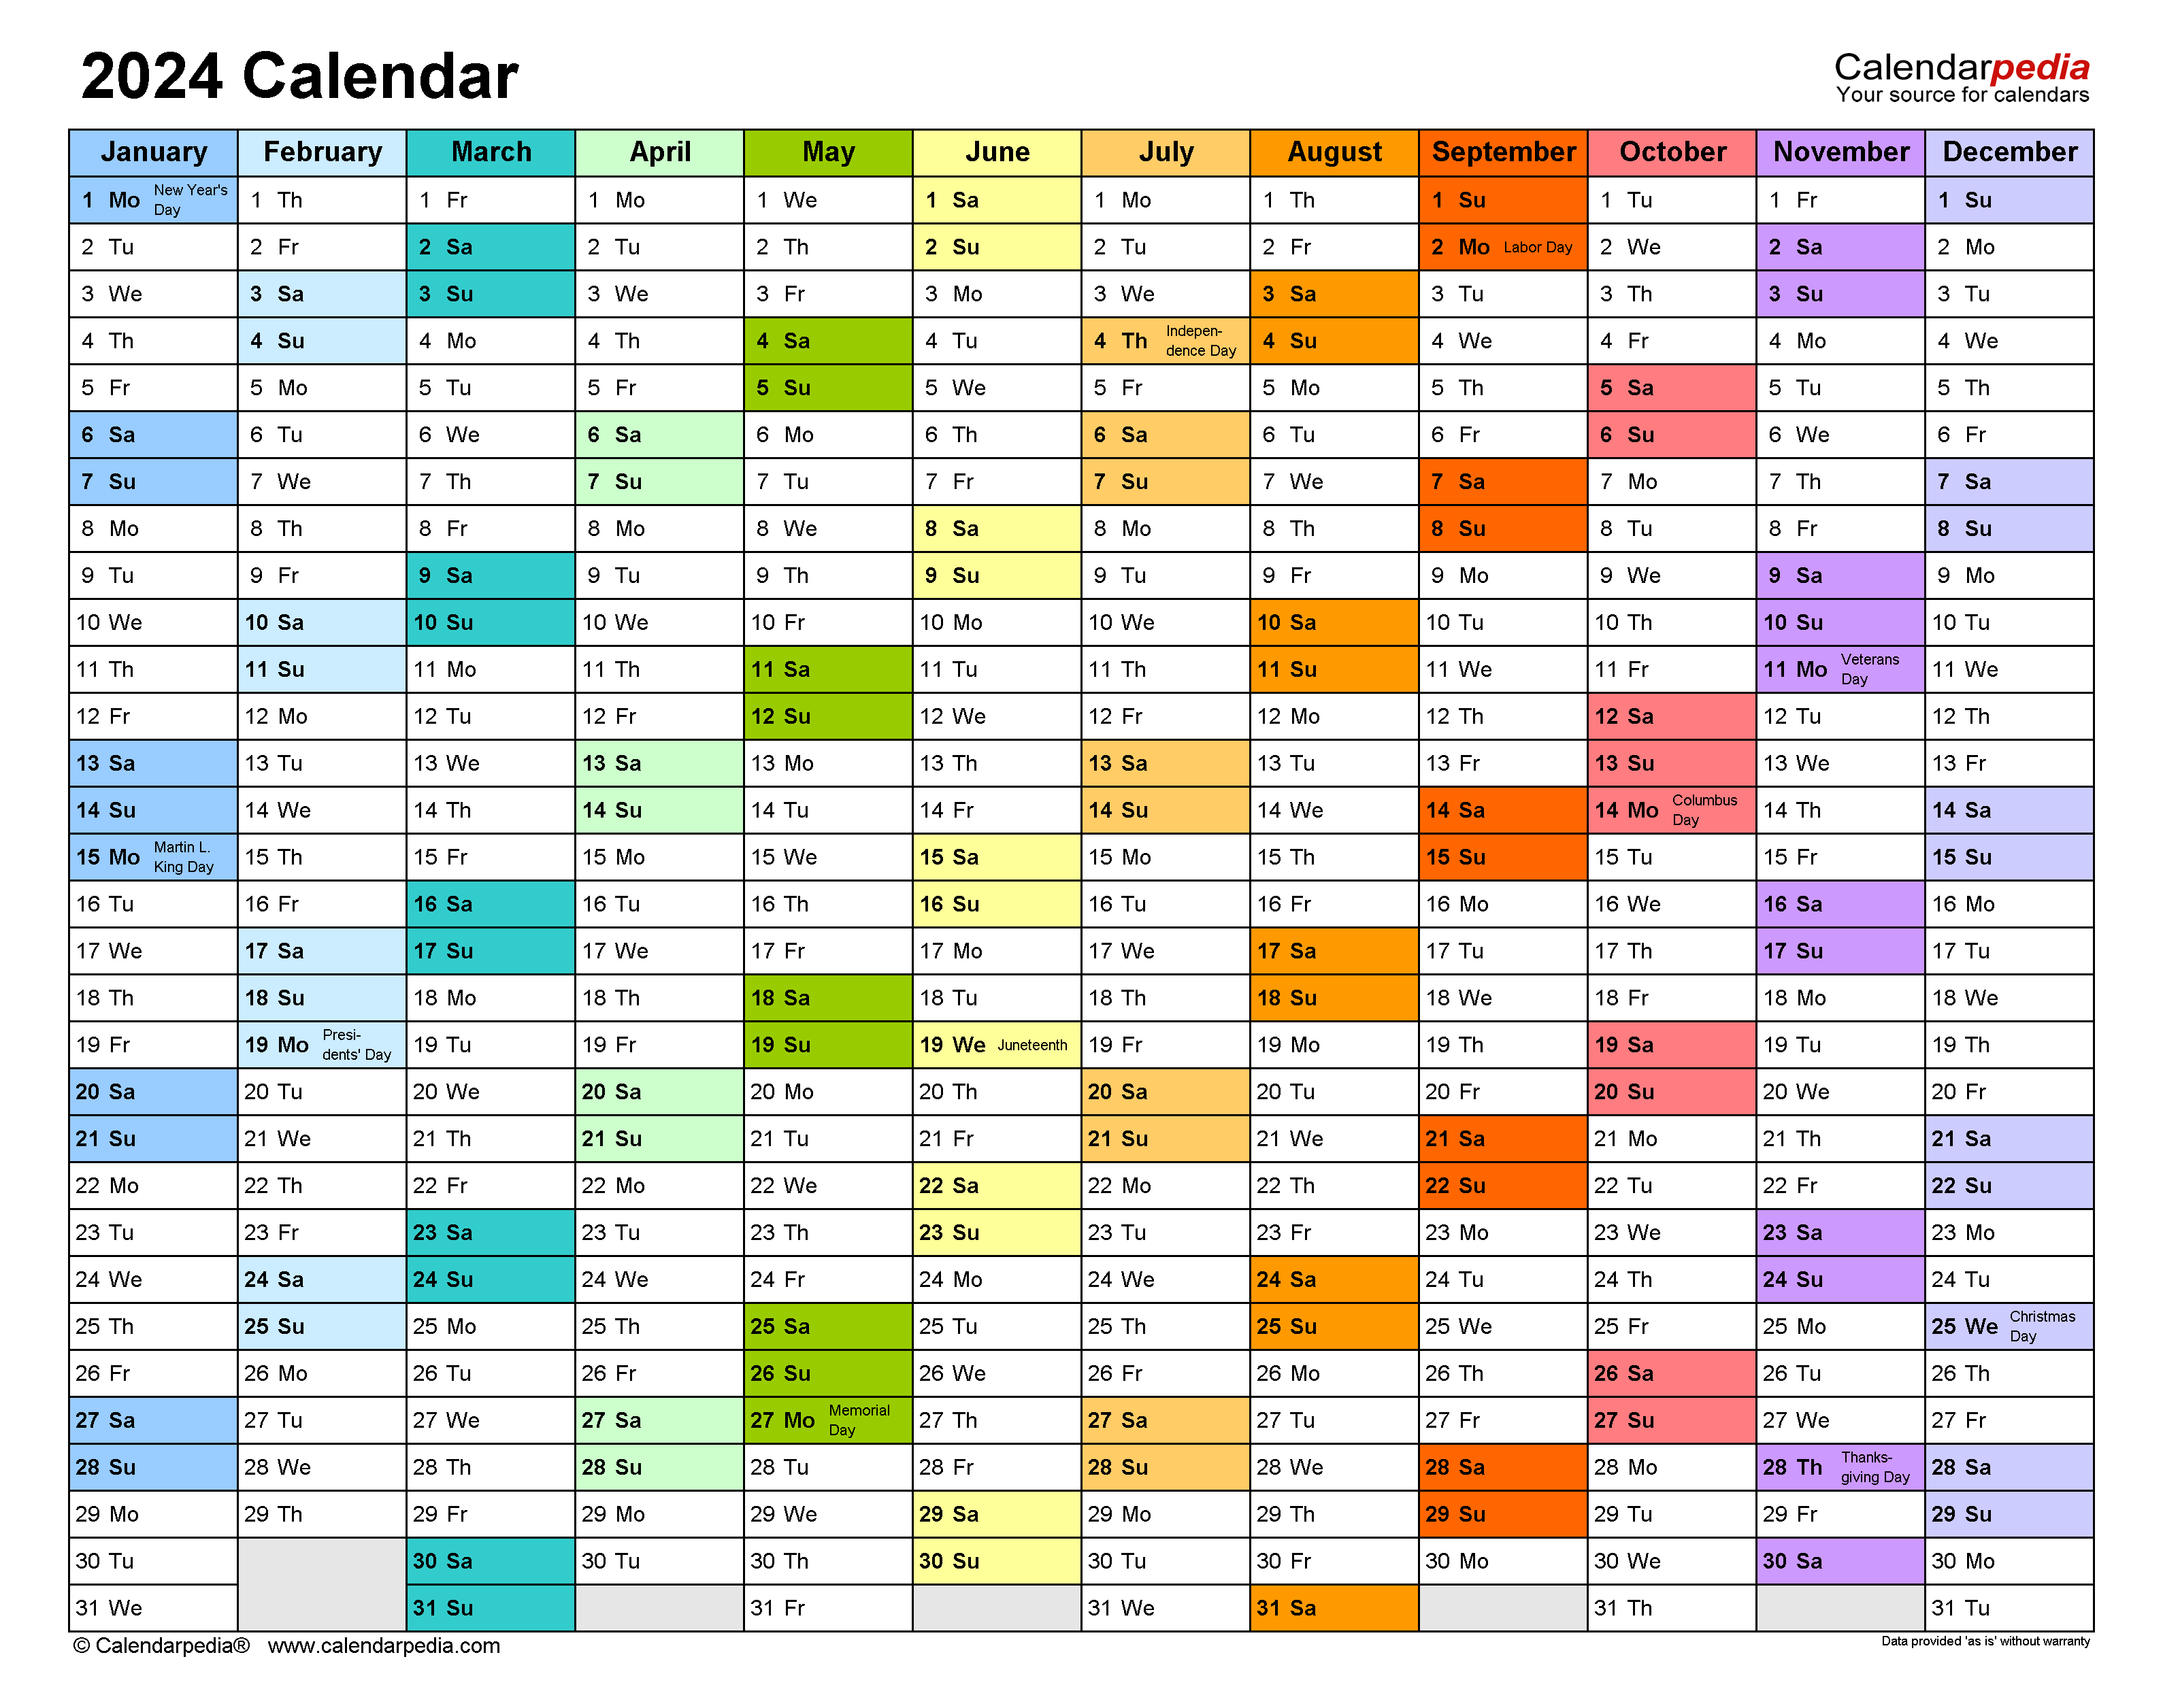 2024 Calendar - Free Printable Word Templates - Calendarpedia for 2024 Calendar With Holidays Printable Word Document